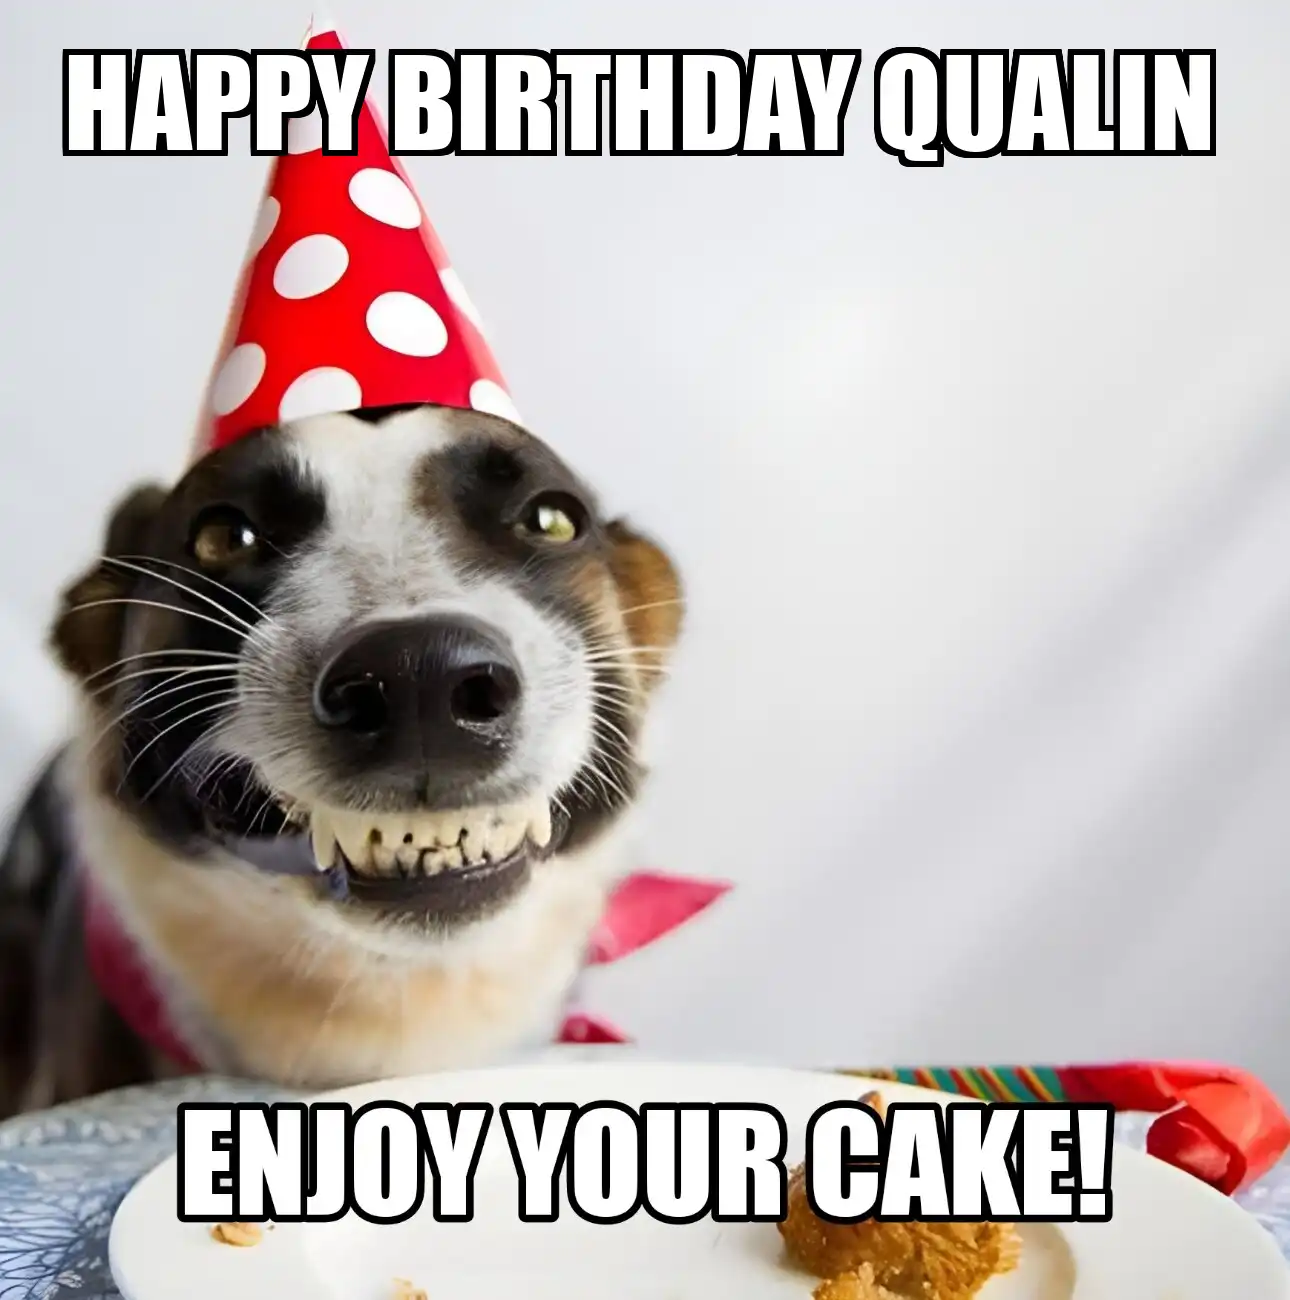 Happy Birthday Qualin Enjoy Your Cake Dog Meme